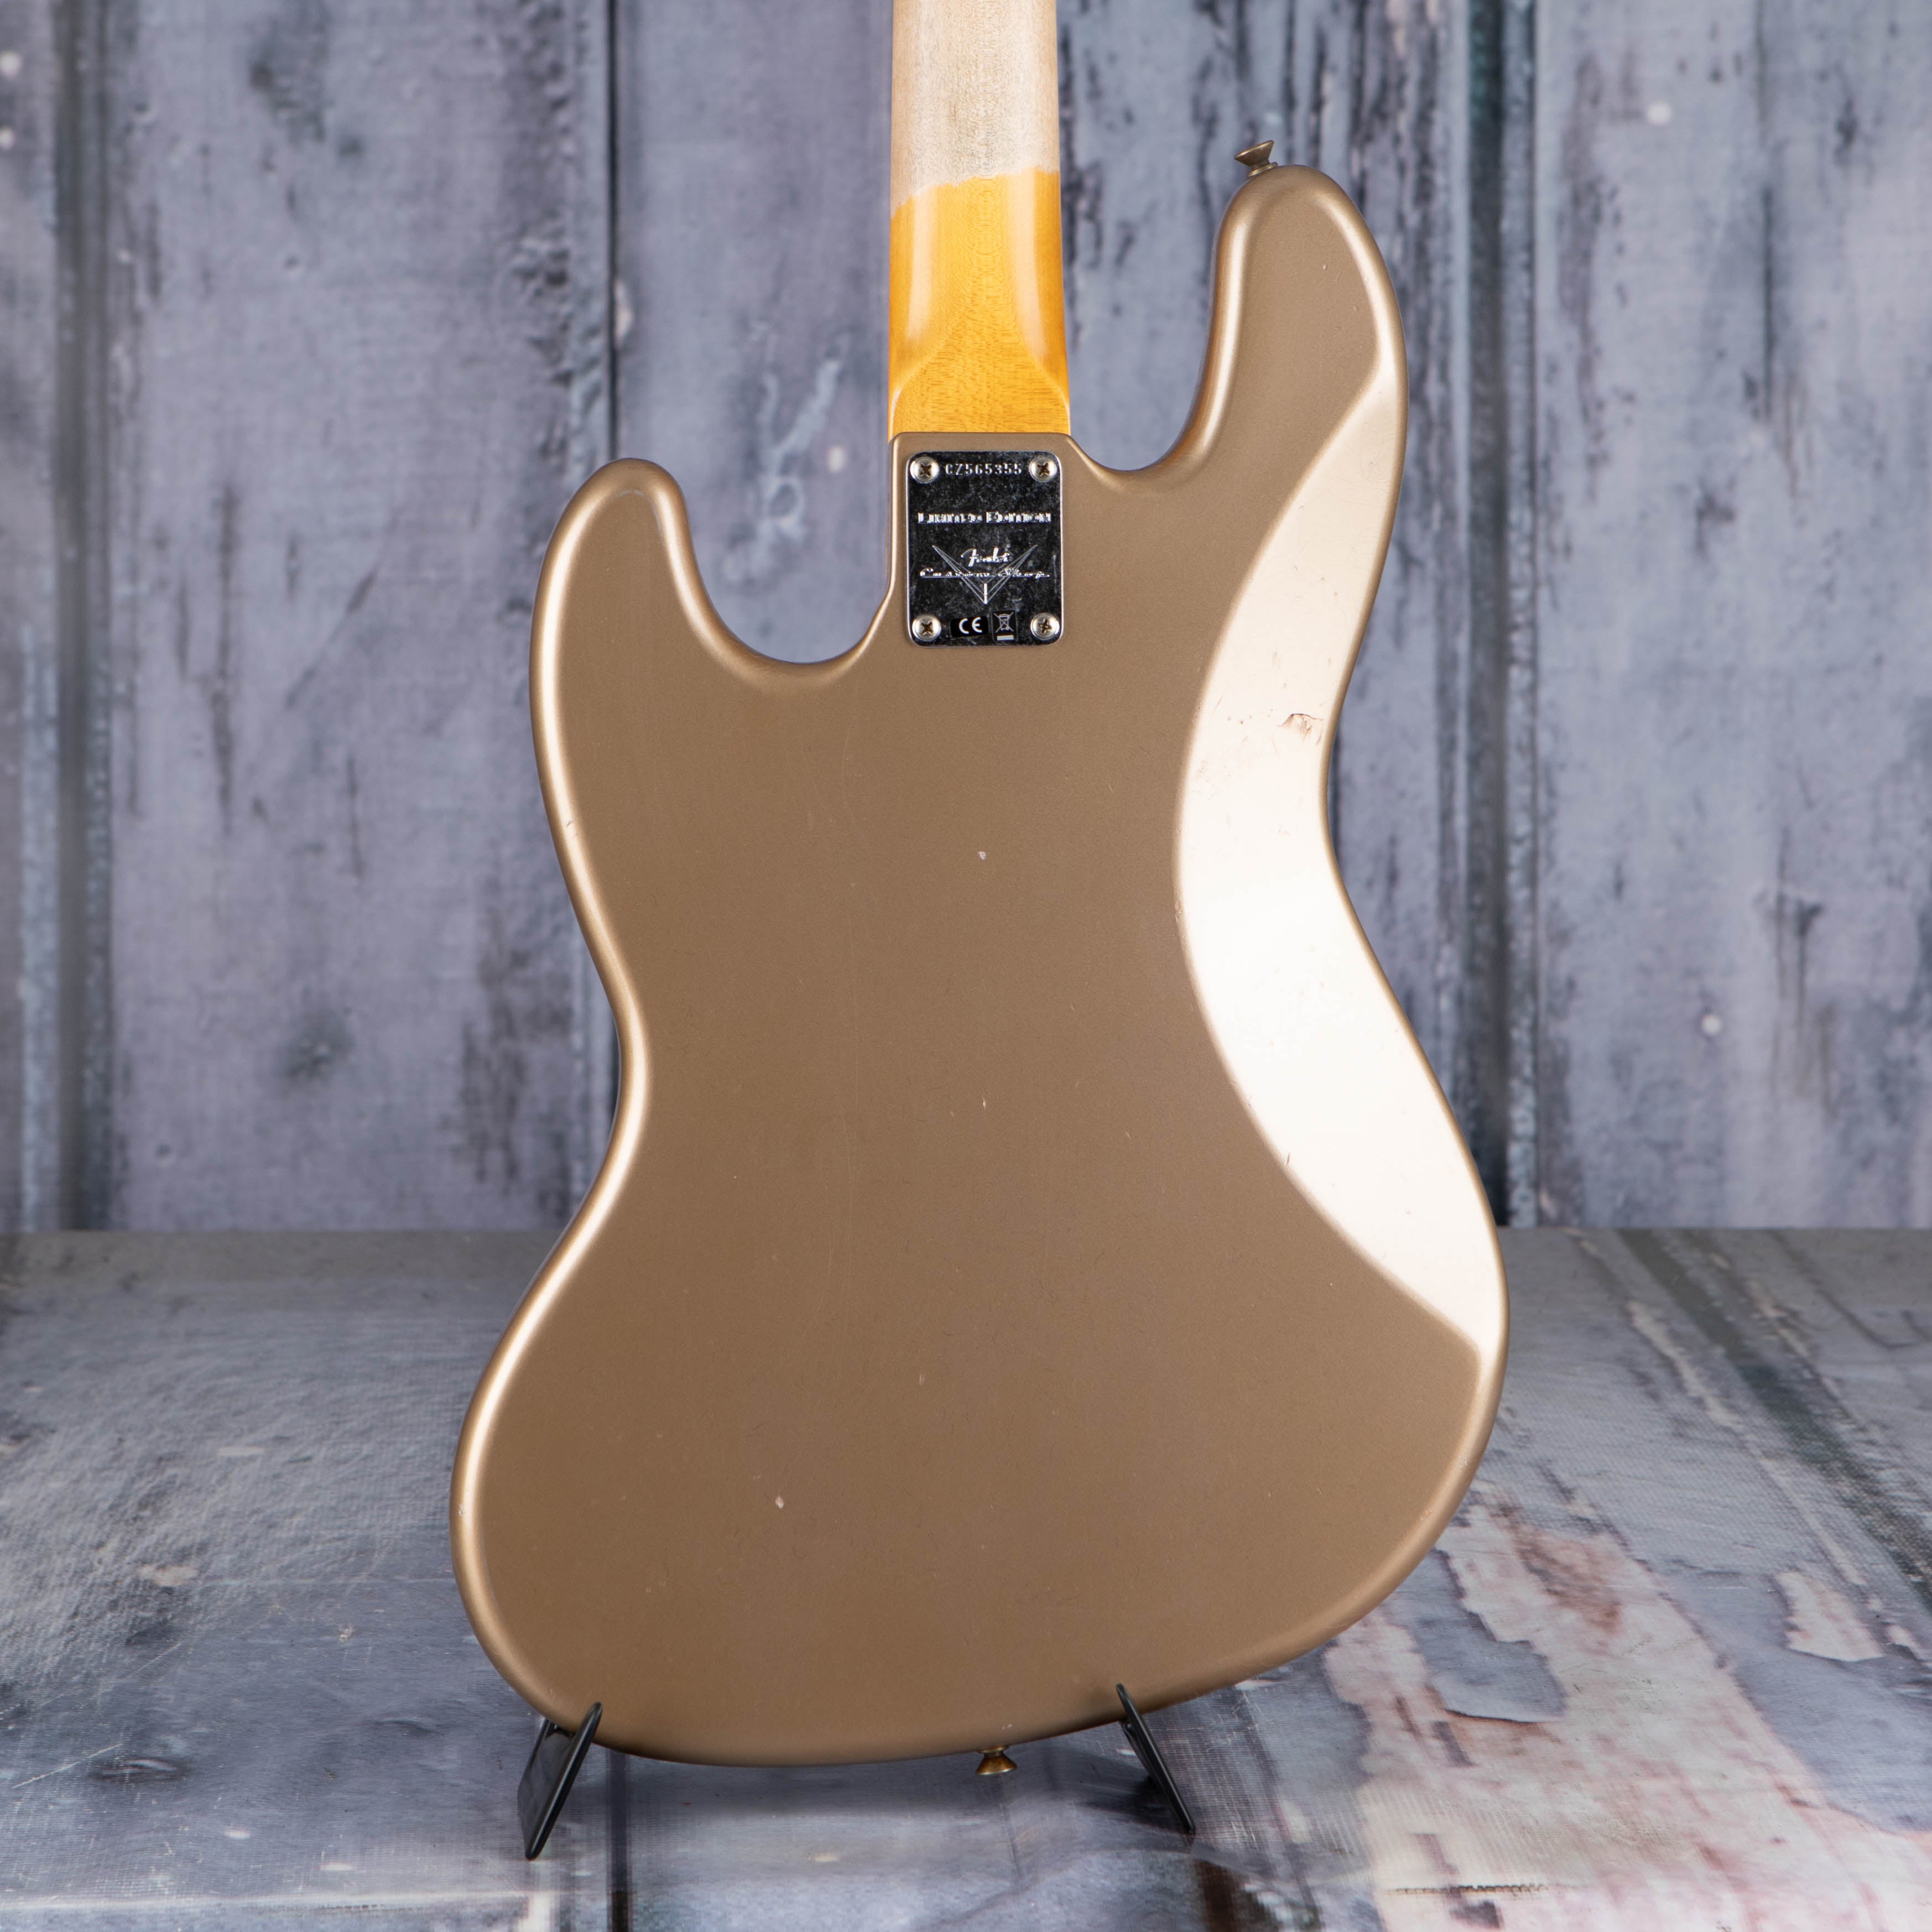 Fender Custom Shop Limited Edition 1964 Jazz Bass Journeyman Relic Electric Bass Guitar, Aged Shoreline Gold, back closeup